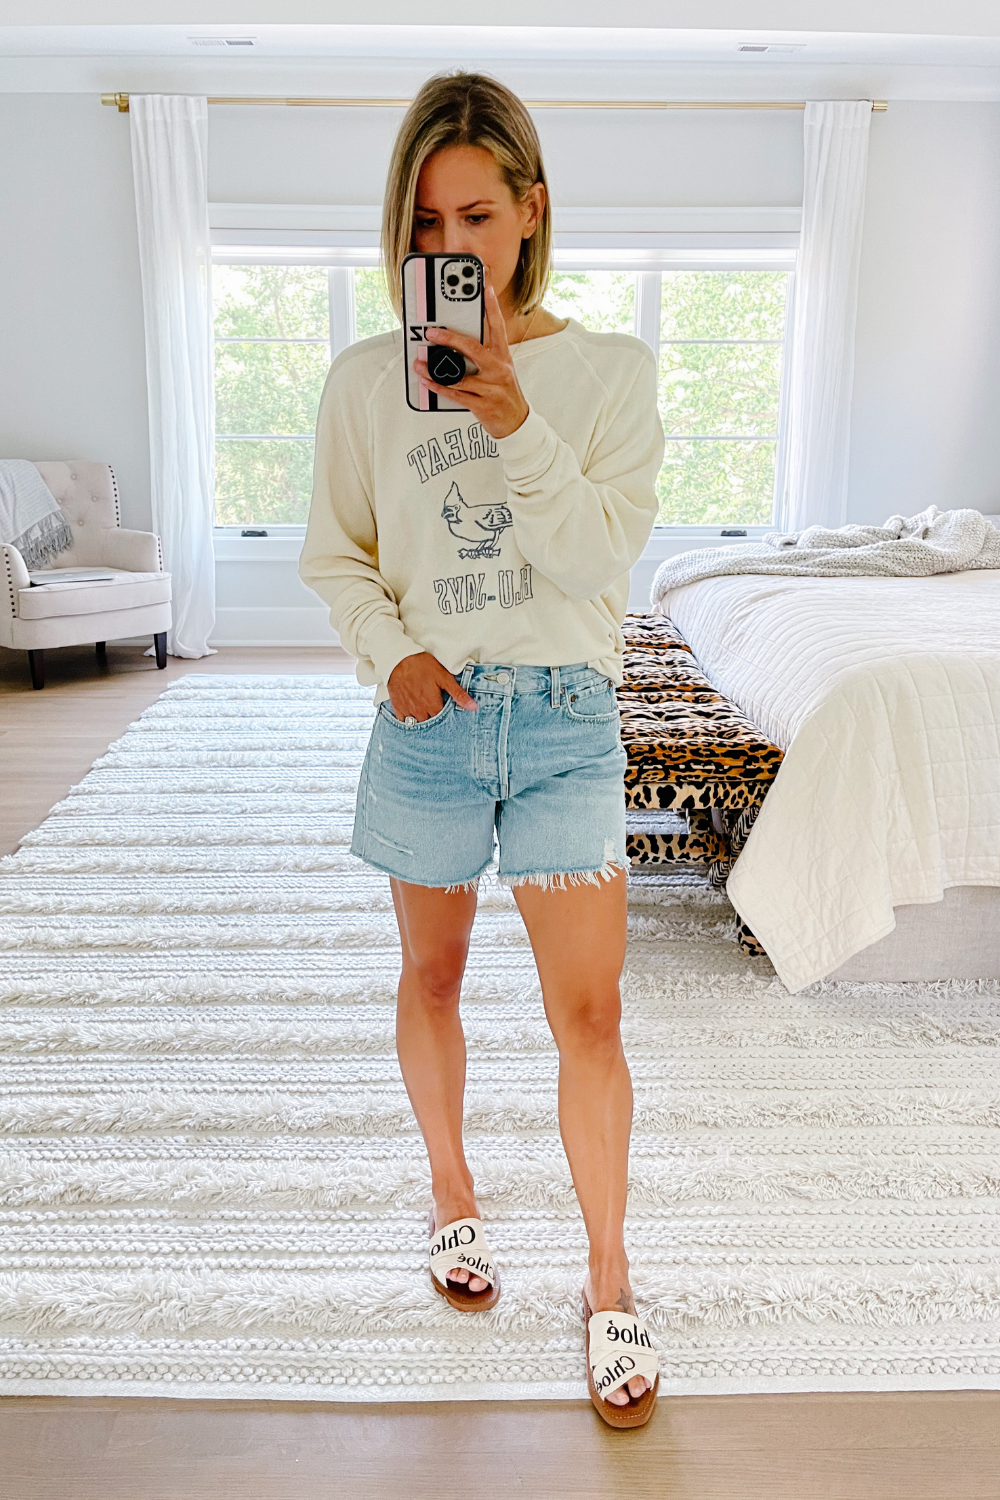 Summer to fall style: sweatshirt and denim shorts